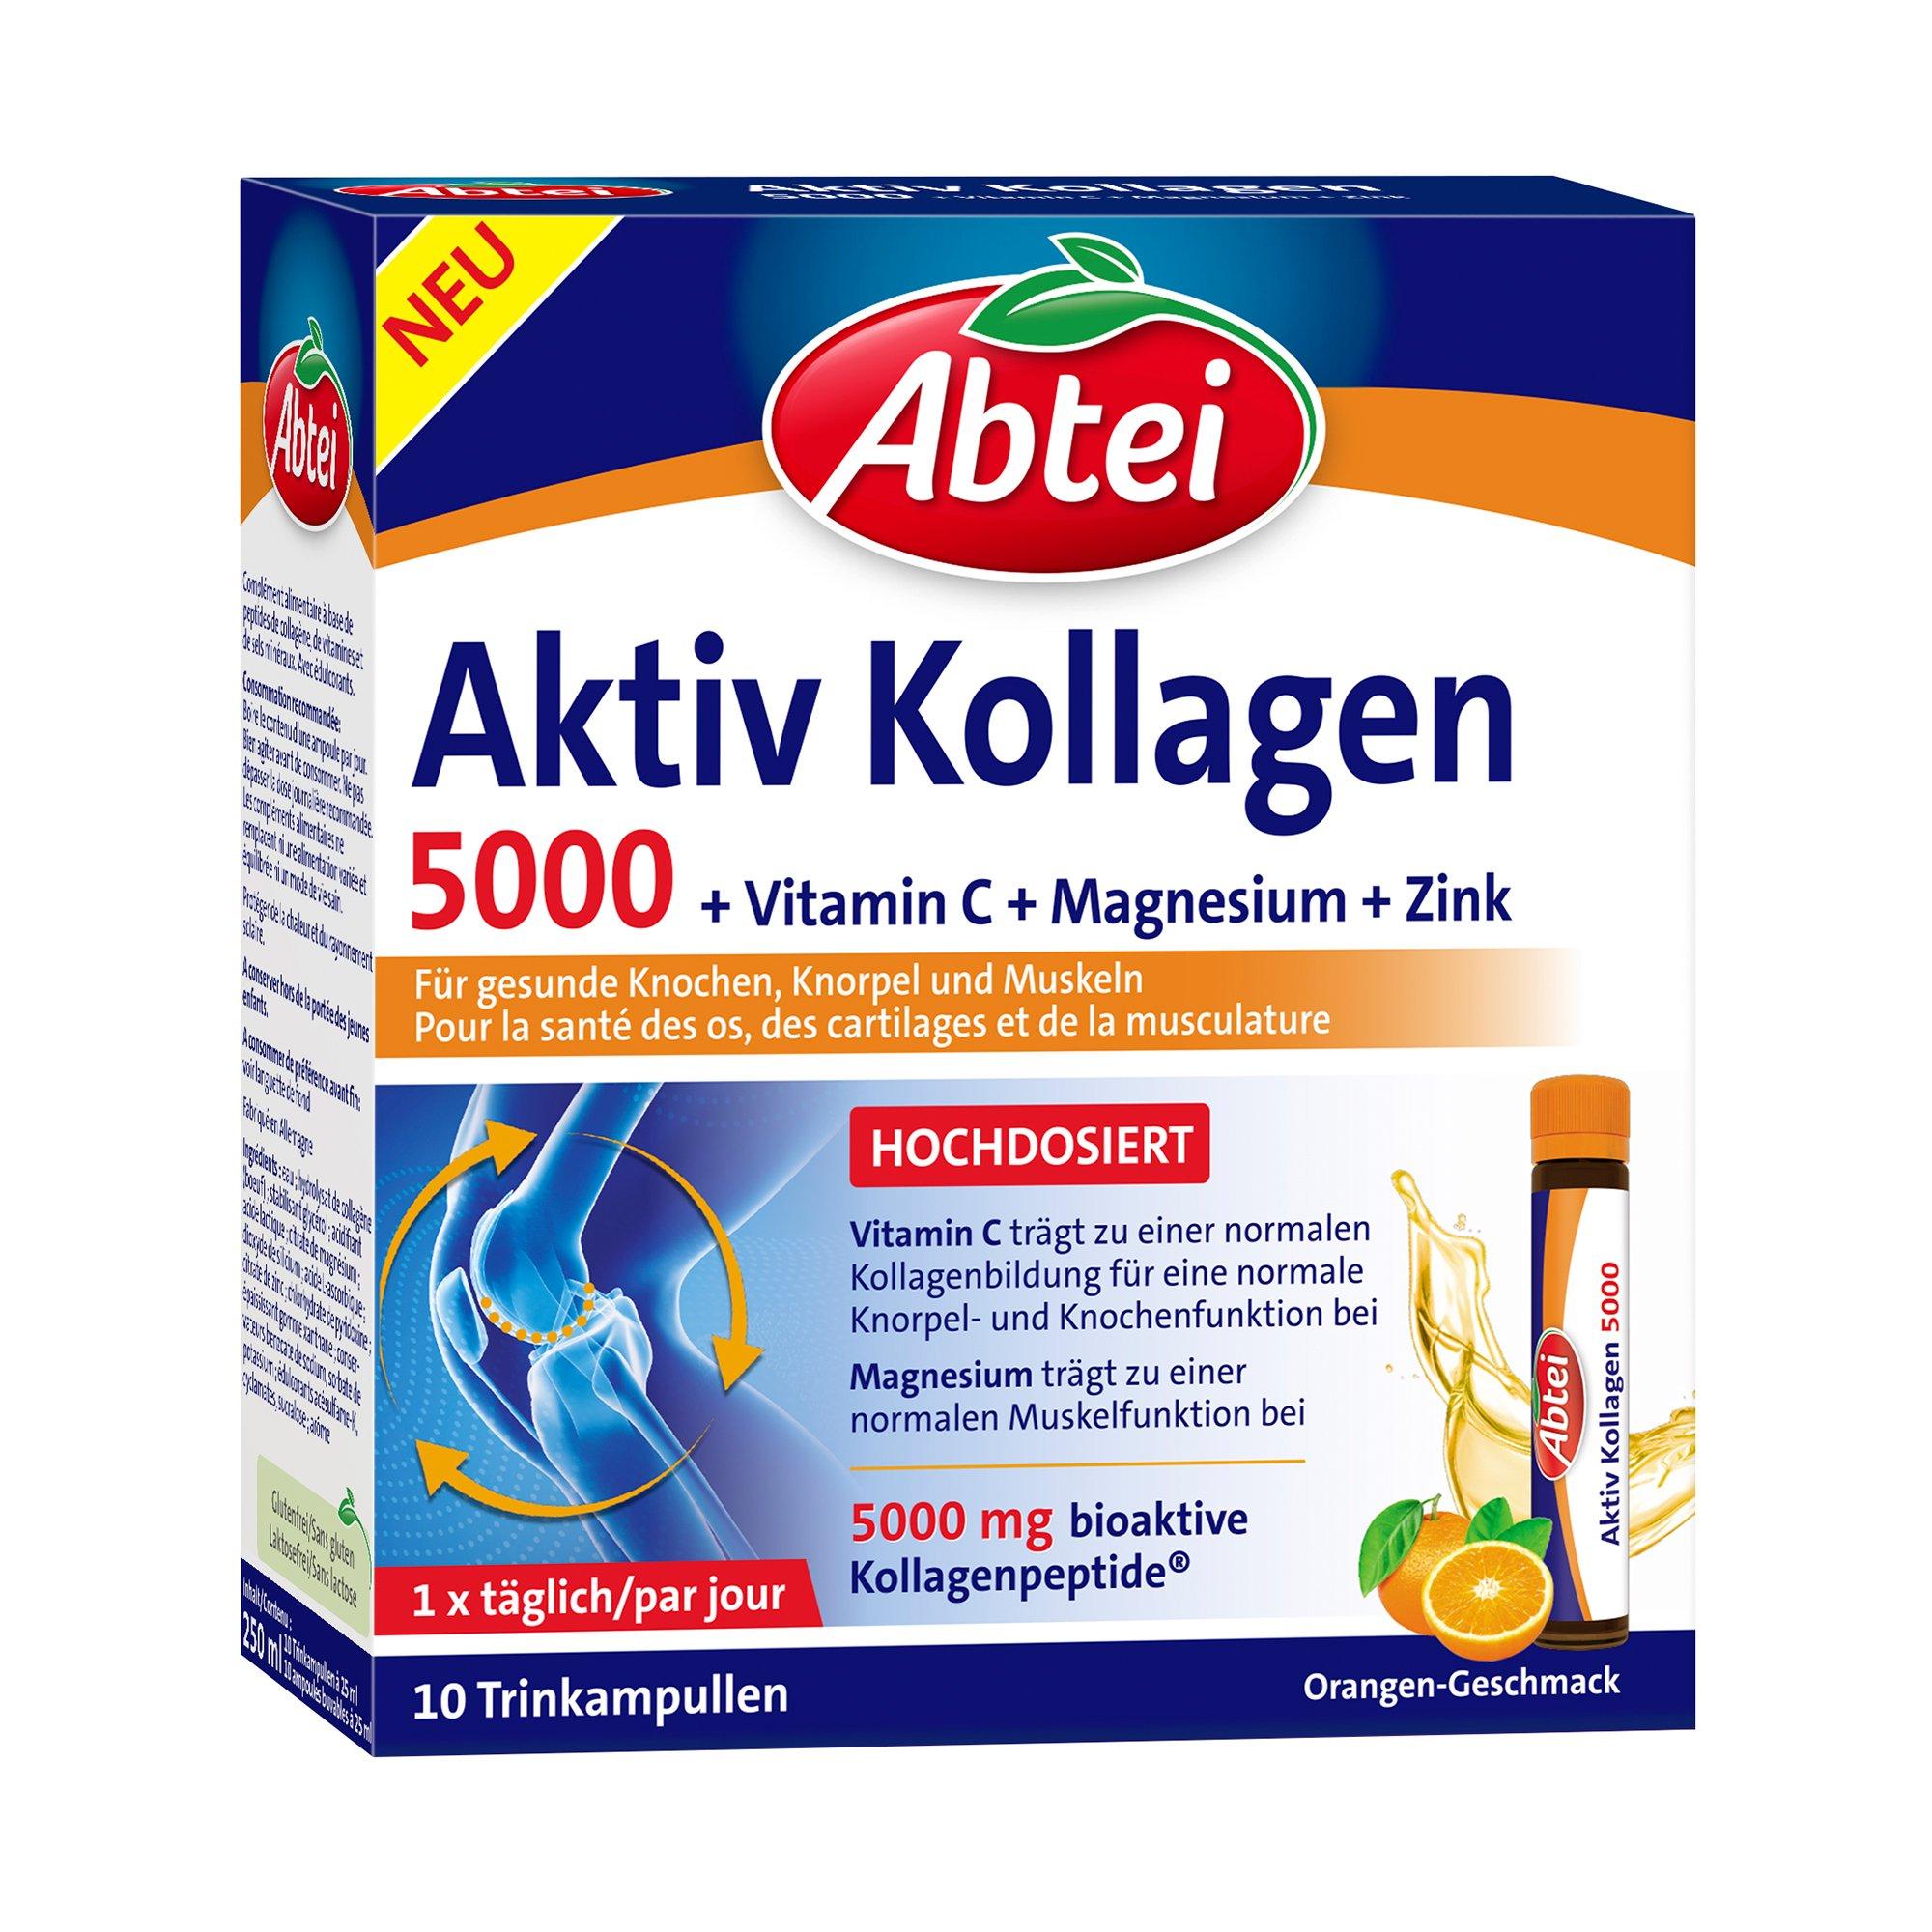 Image of Abtei Aktiv Kollagen 5000 - 10 pieces